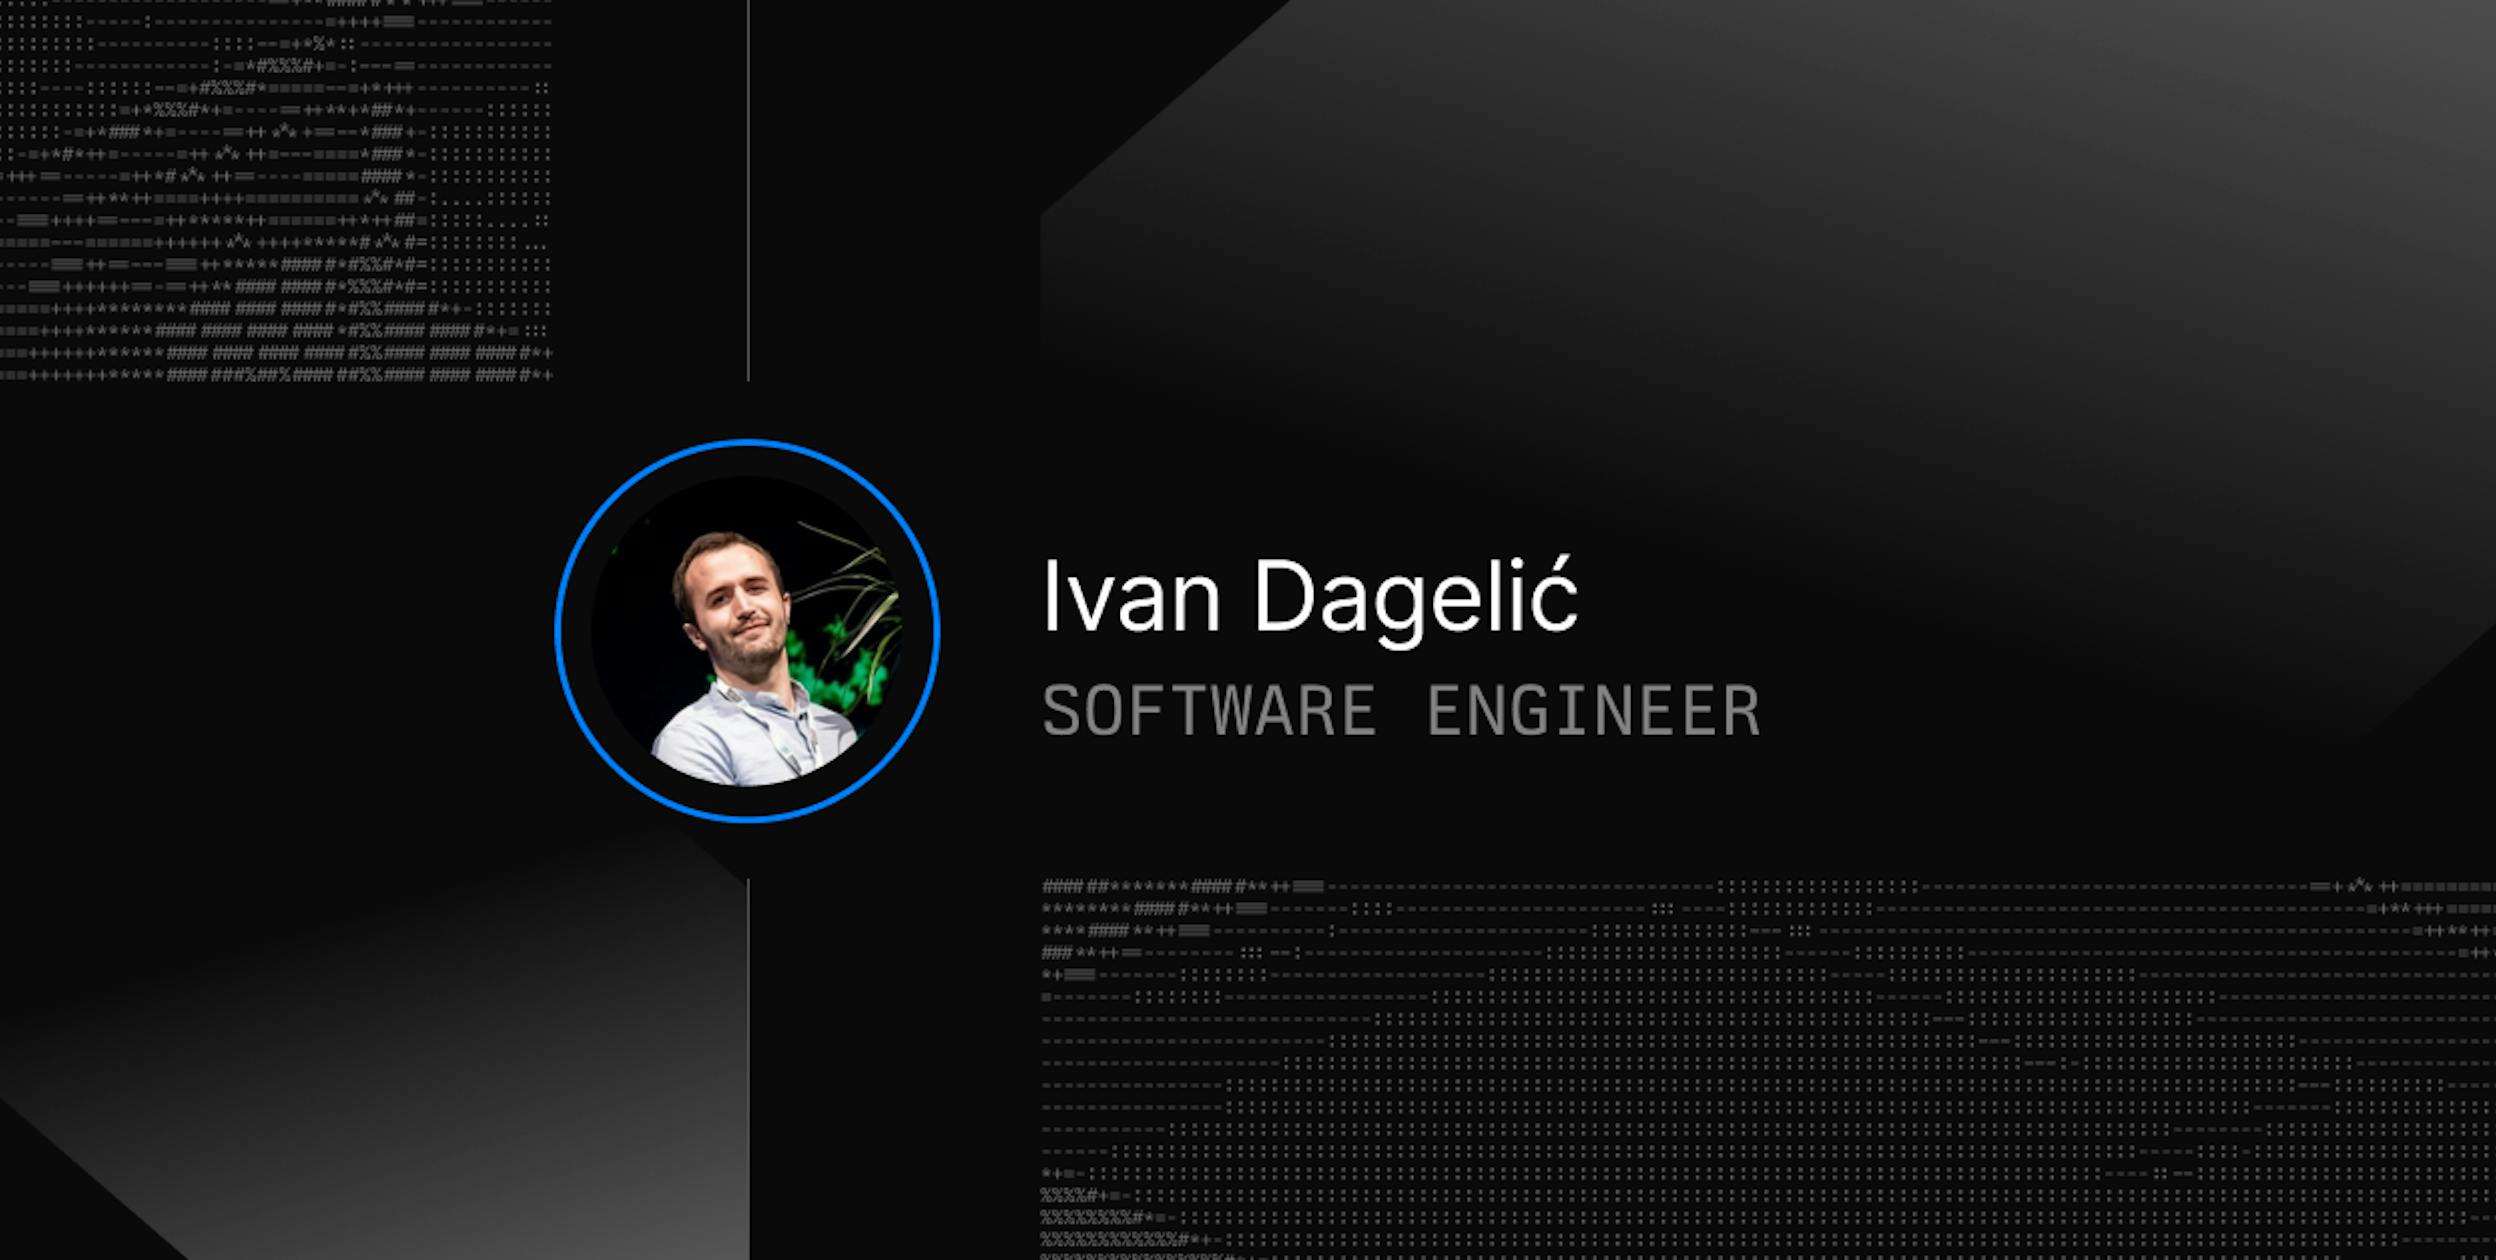 Meet Ivan Dagelić, Our Software Engineer and CLI Wizard